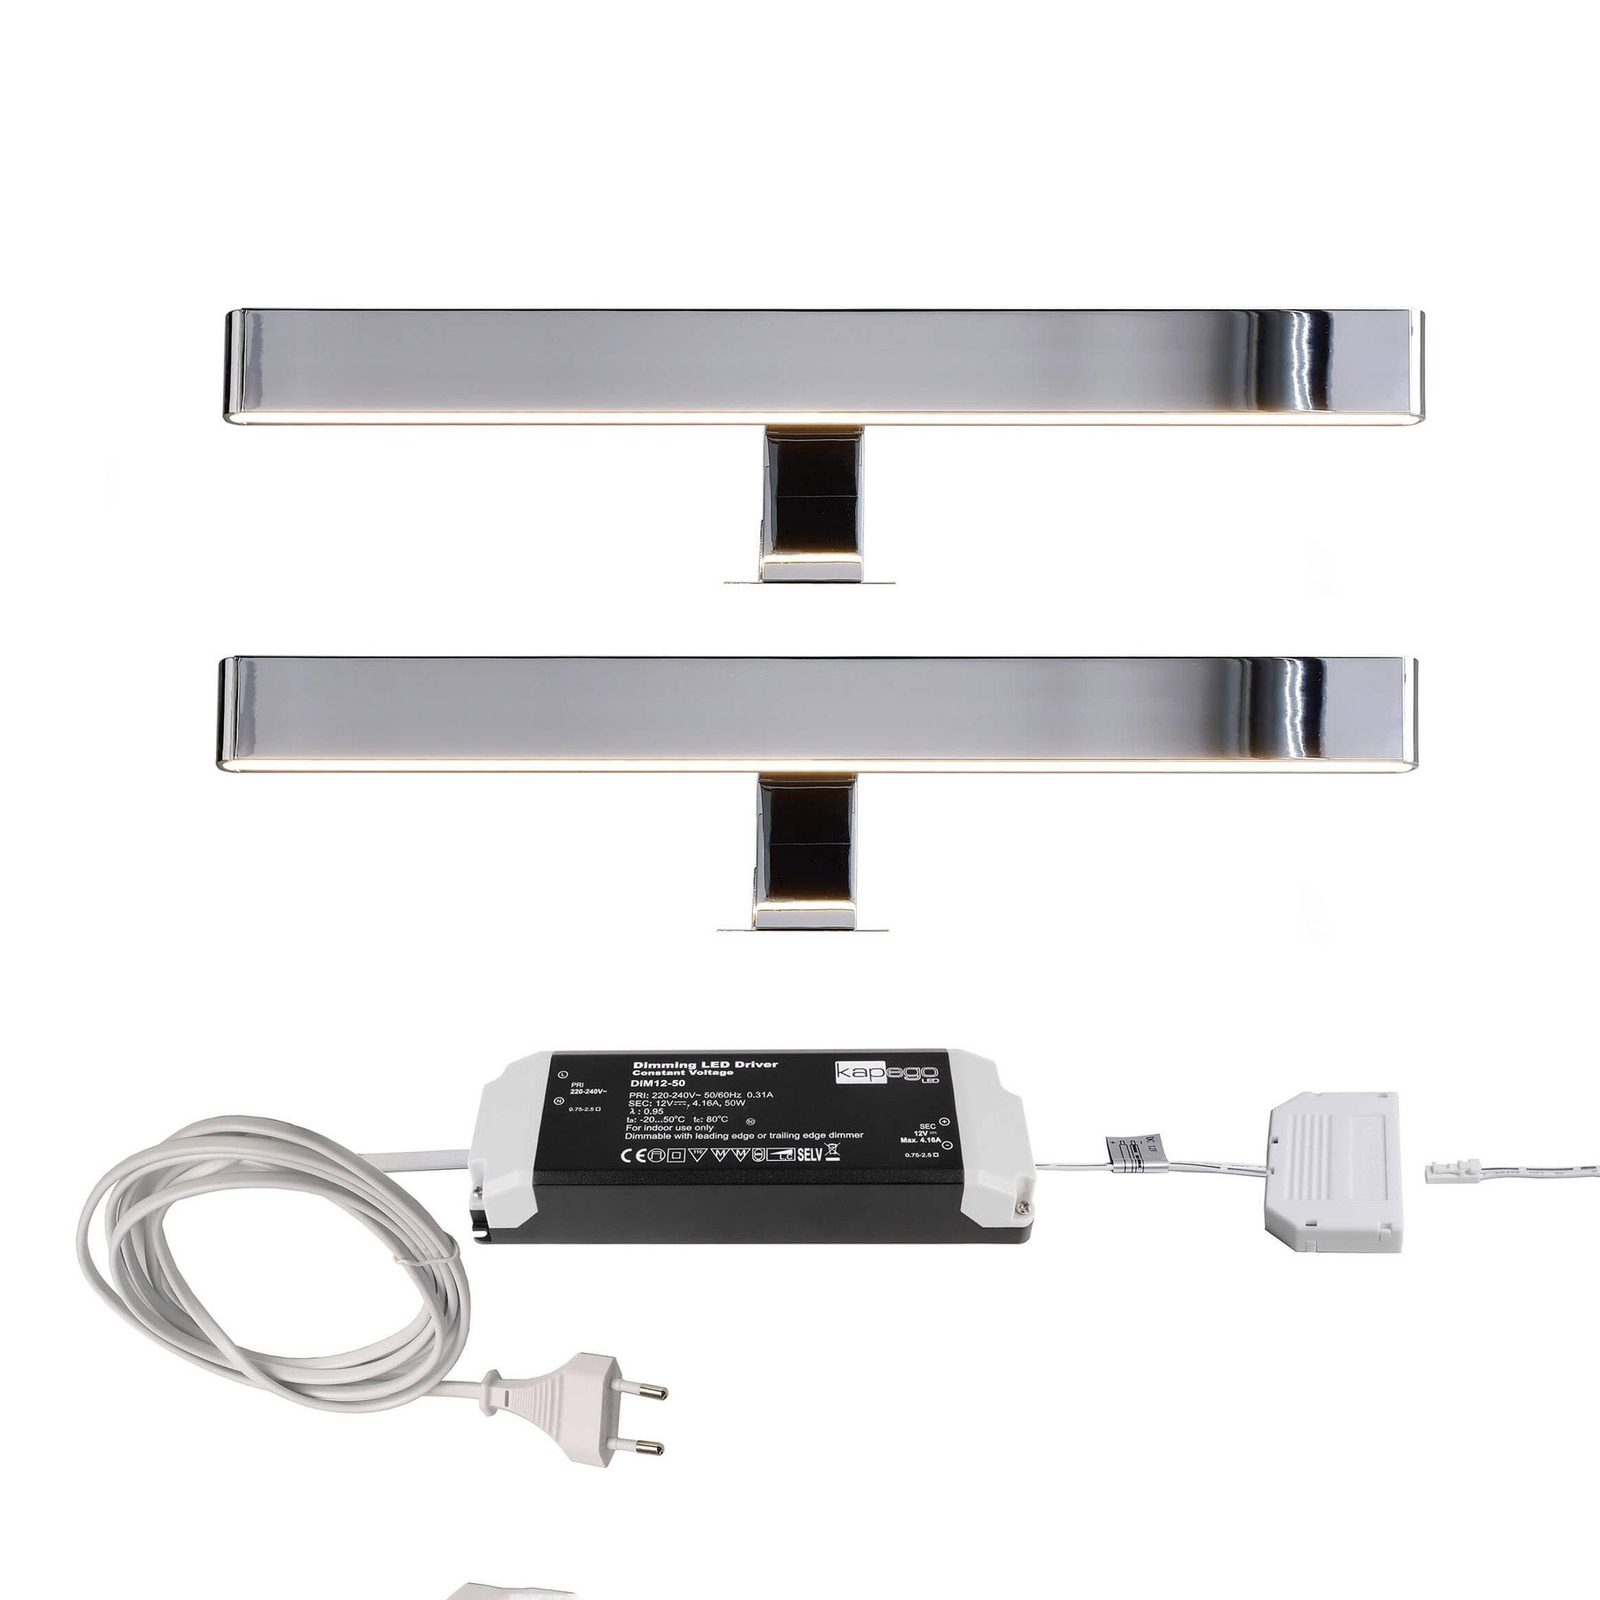 LED-möbelpåbyggnadslampa Spegel Line, 12 W 51 cm